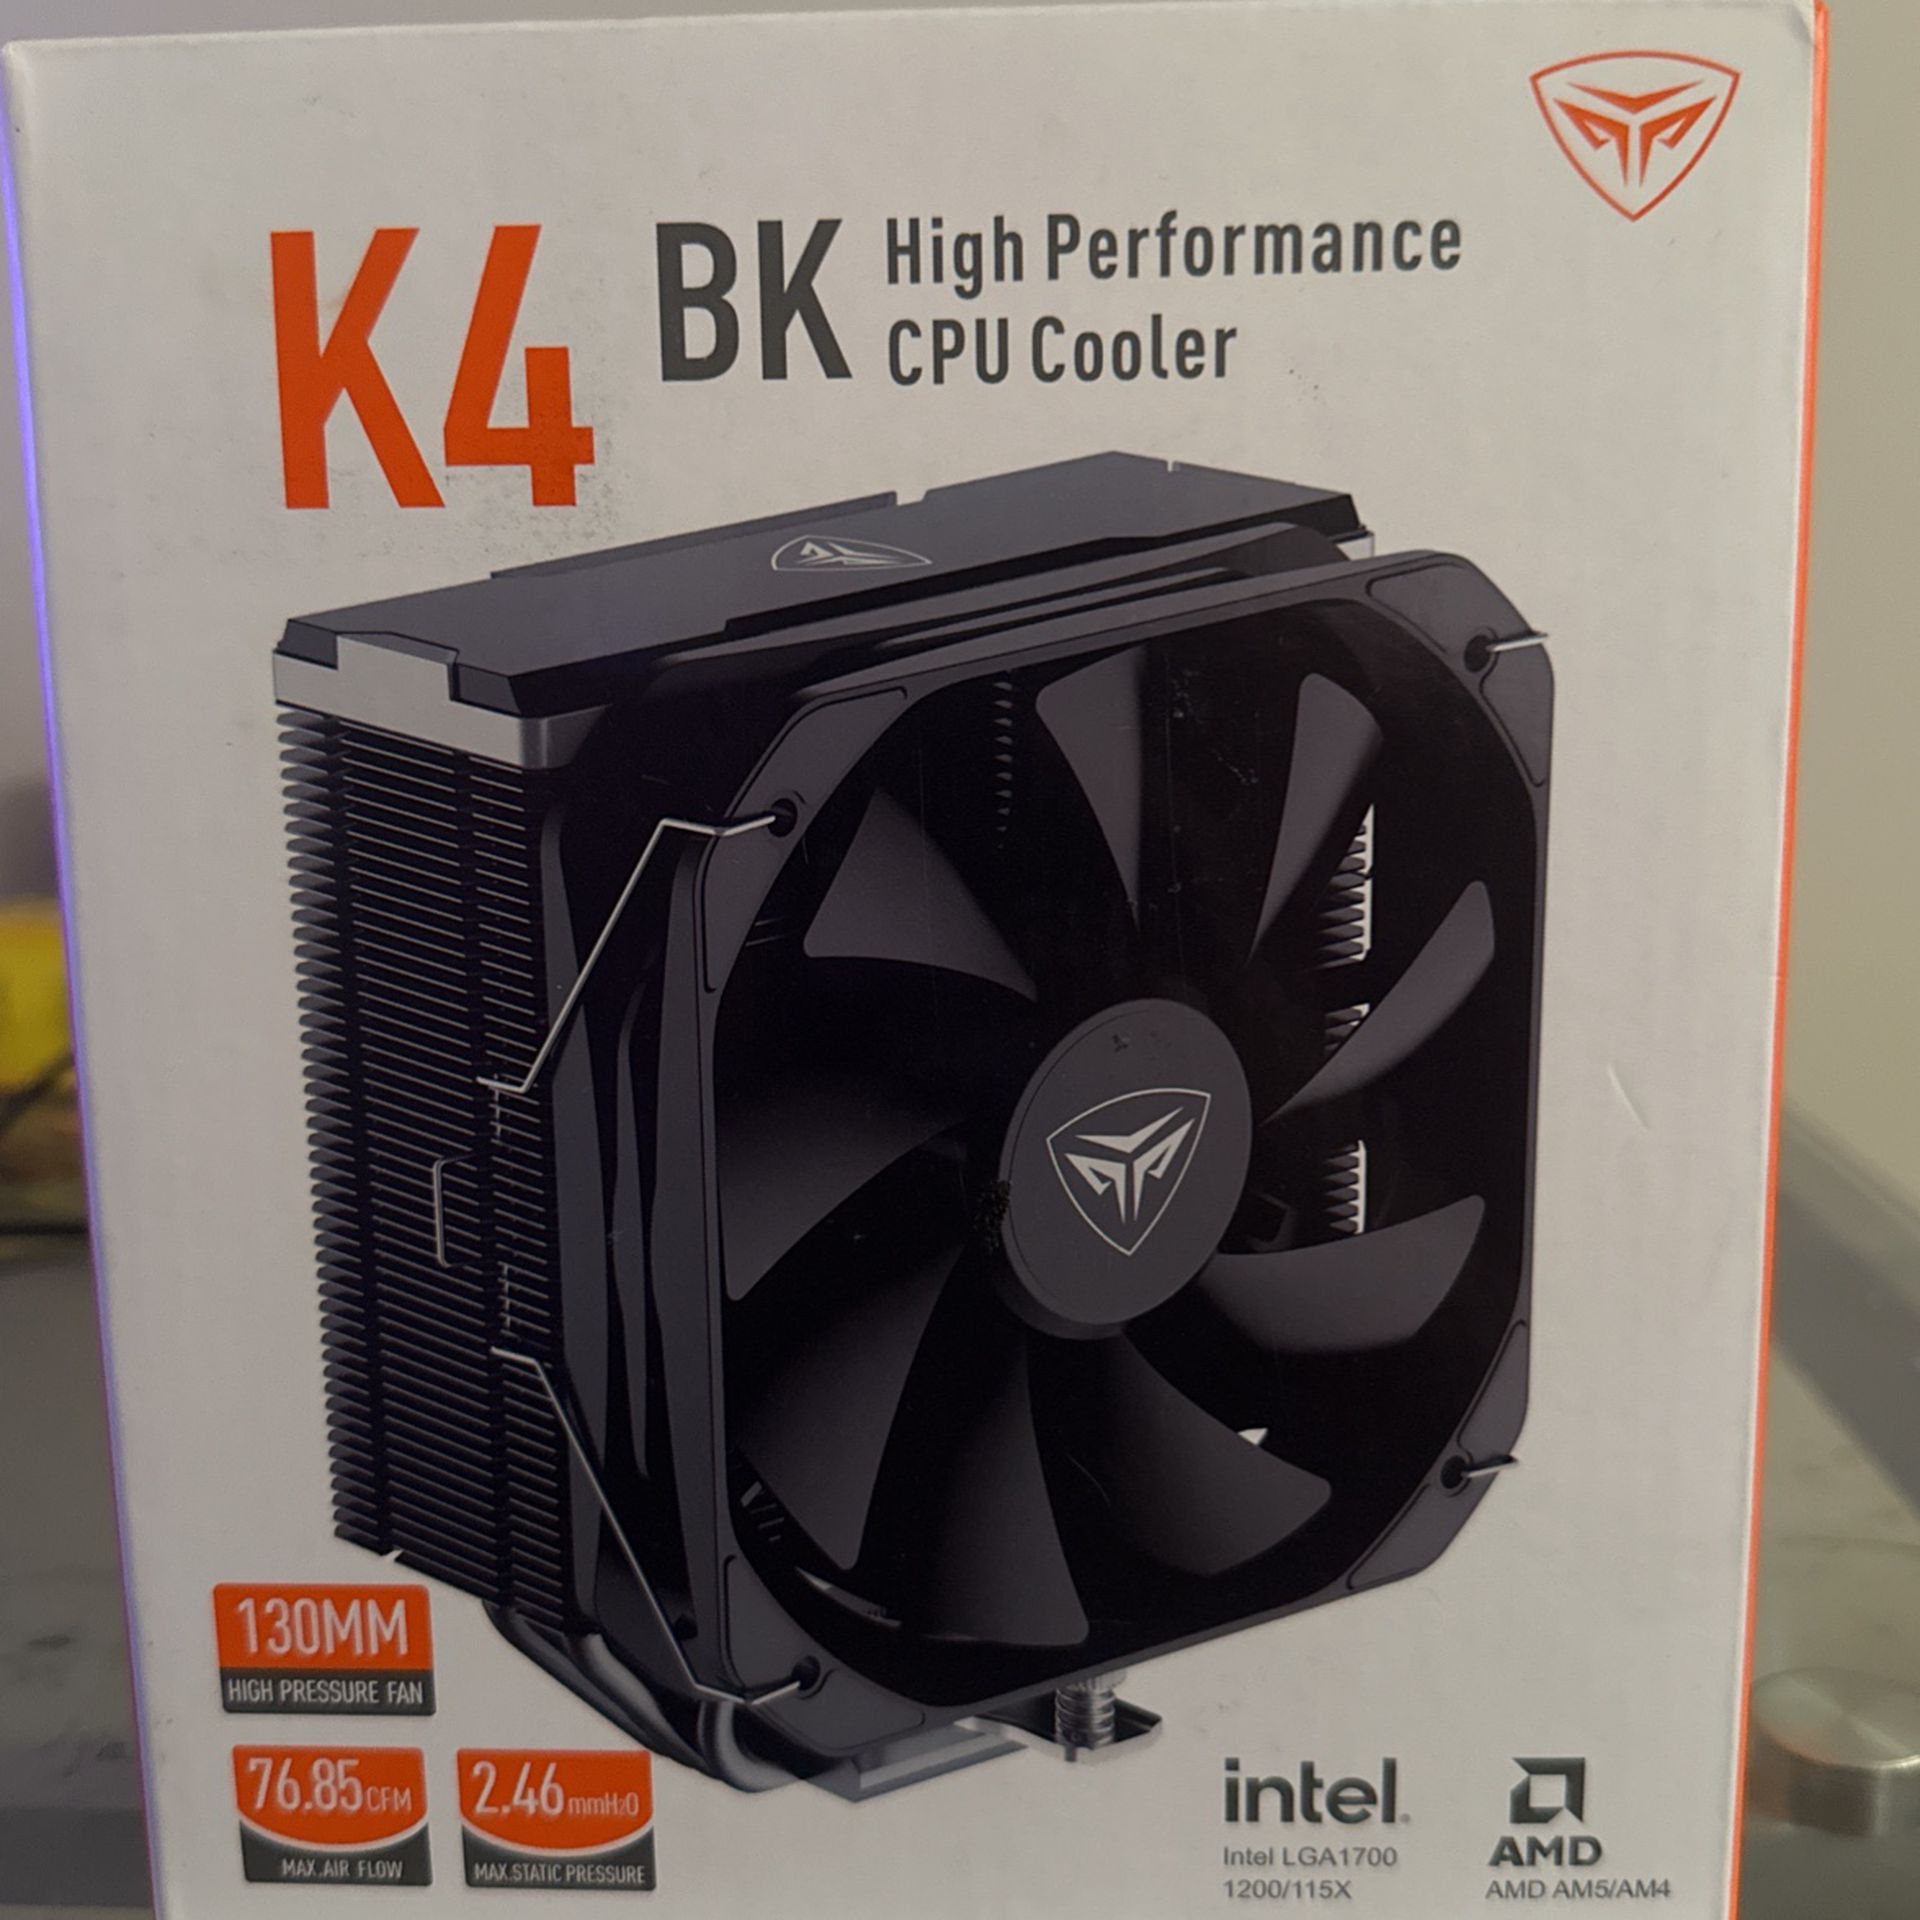 K4 Bk High Performance CPU Cooler